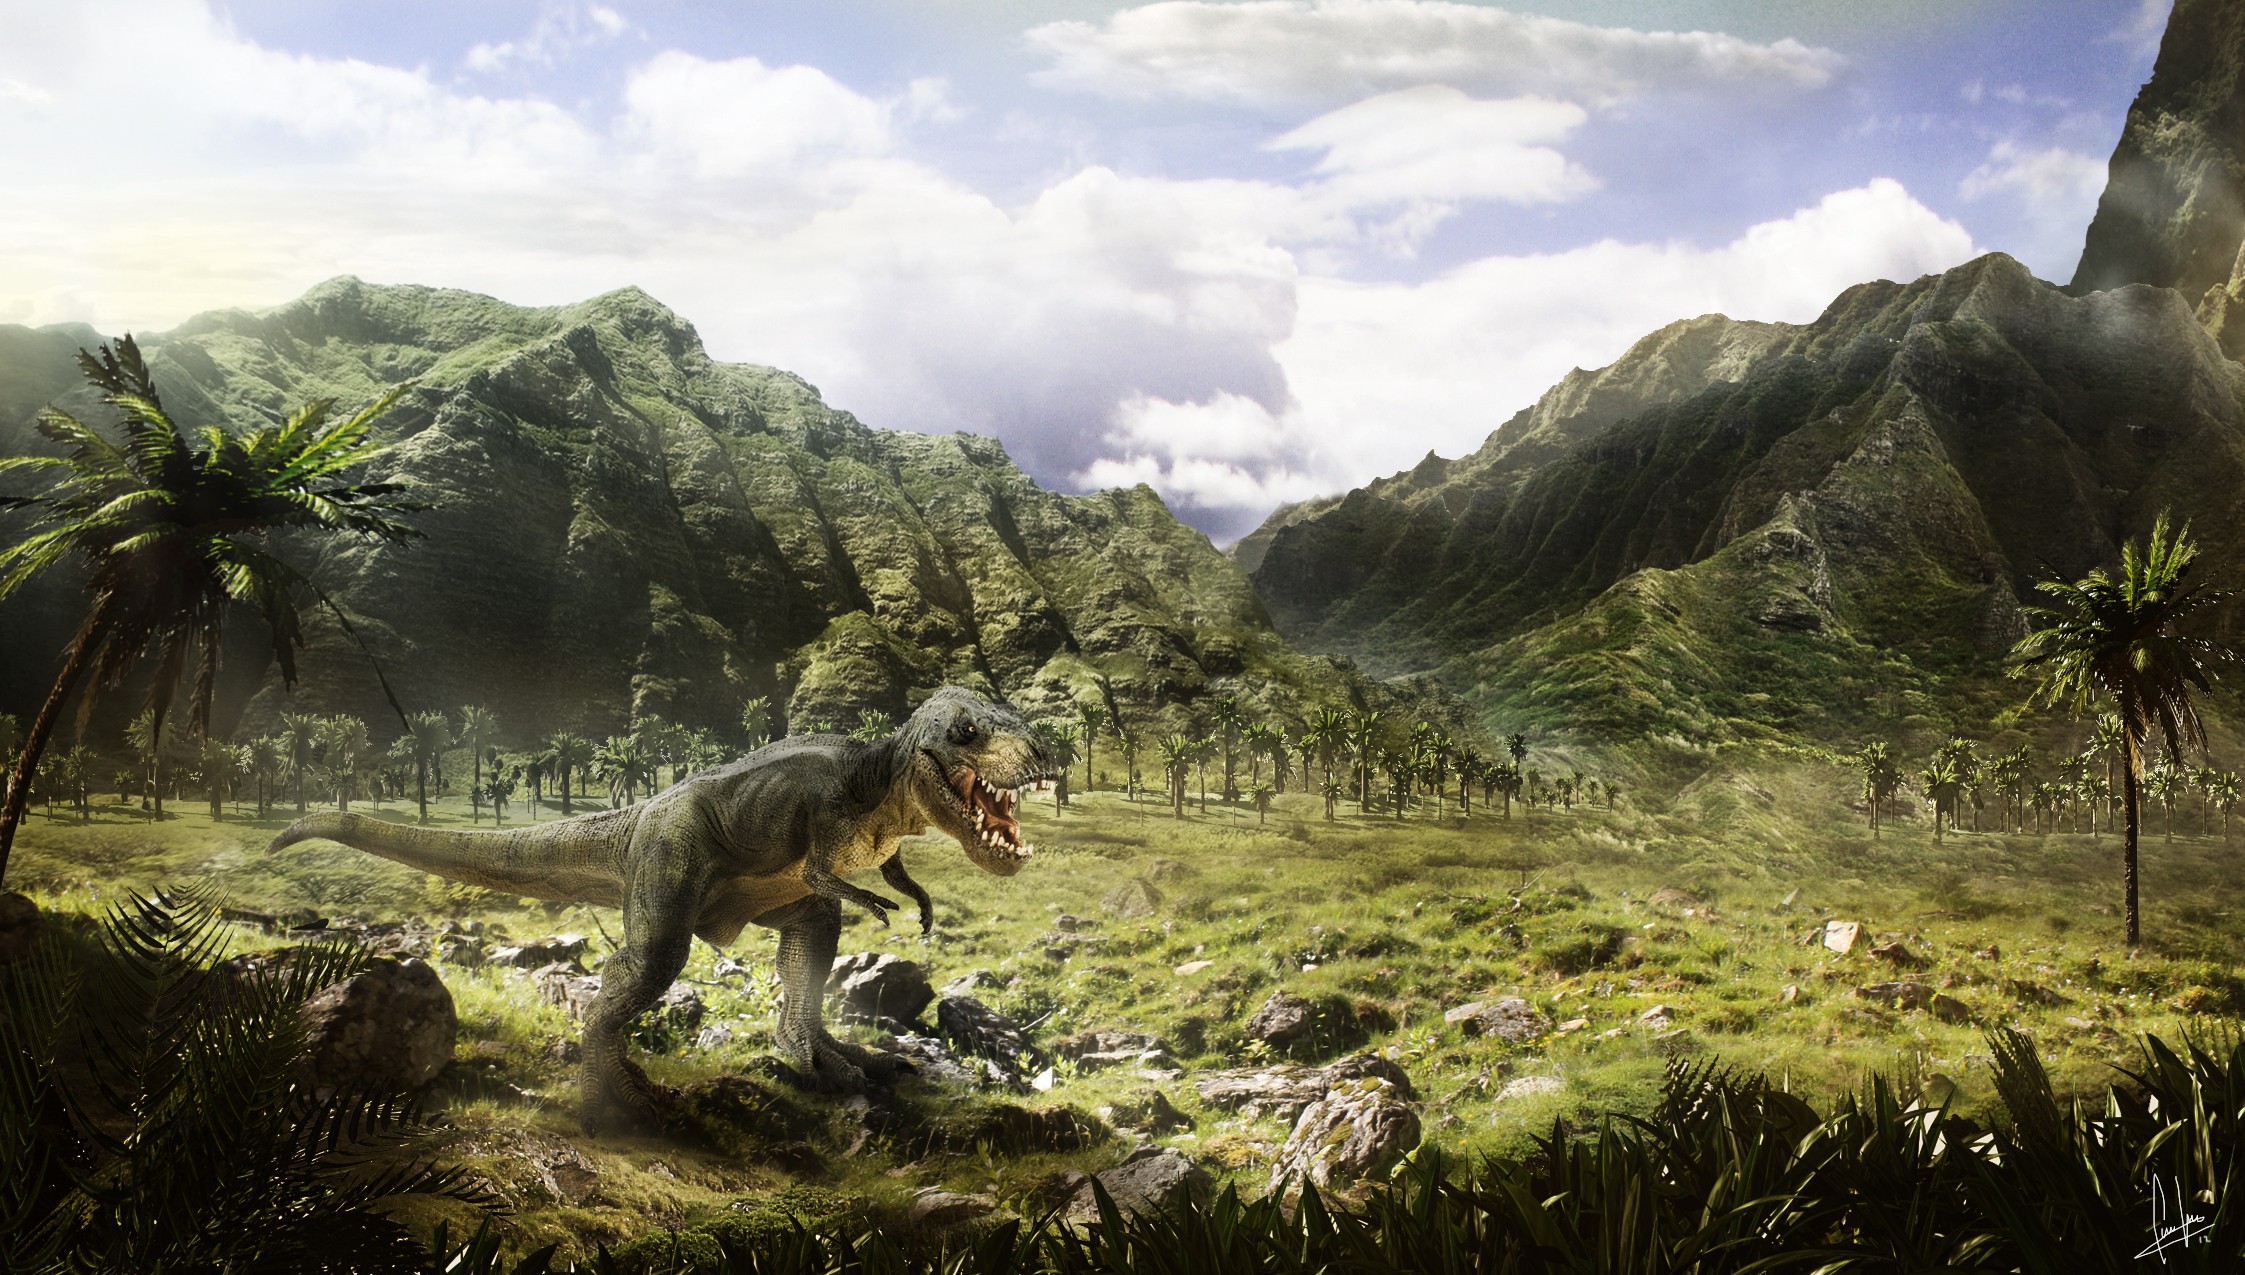 General 2245x1275 artwork dinosaurs fantasy art creature animals digital art landscape nature mountains